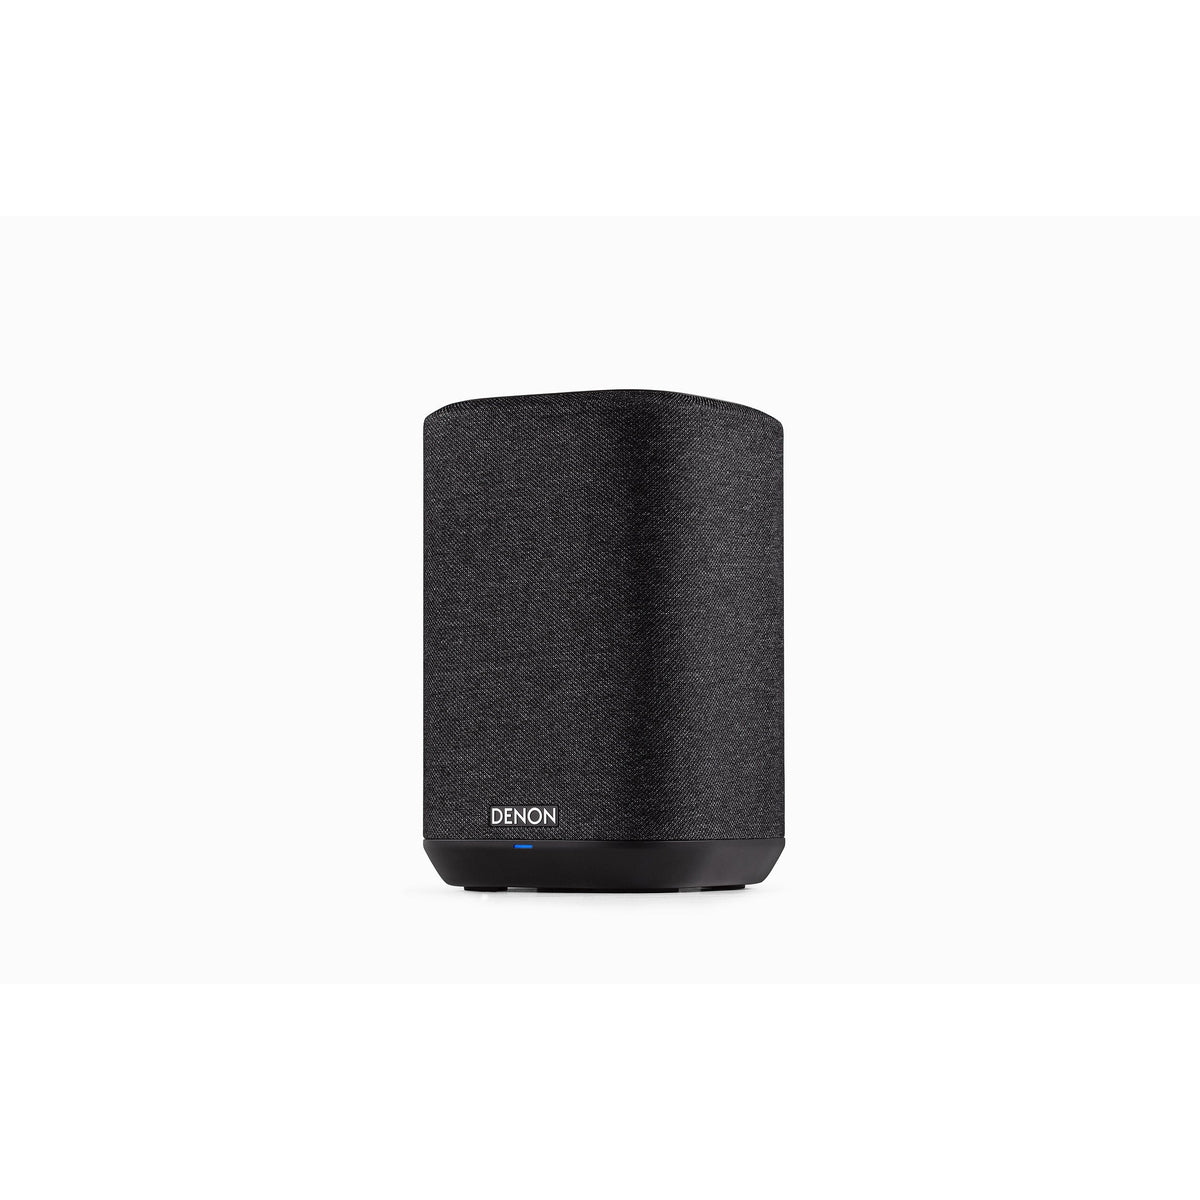 Denon Home 150 Compact Smart Speaker - Black | DENONHOME150BKE2GB from Denon - DID Electrical